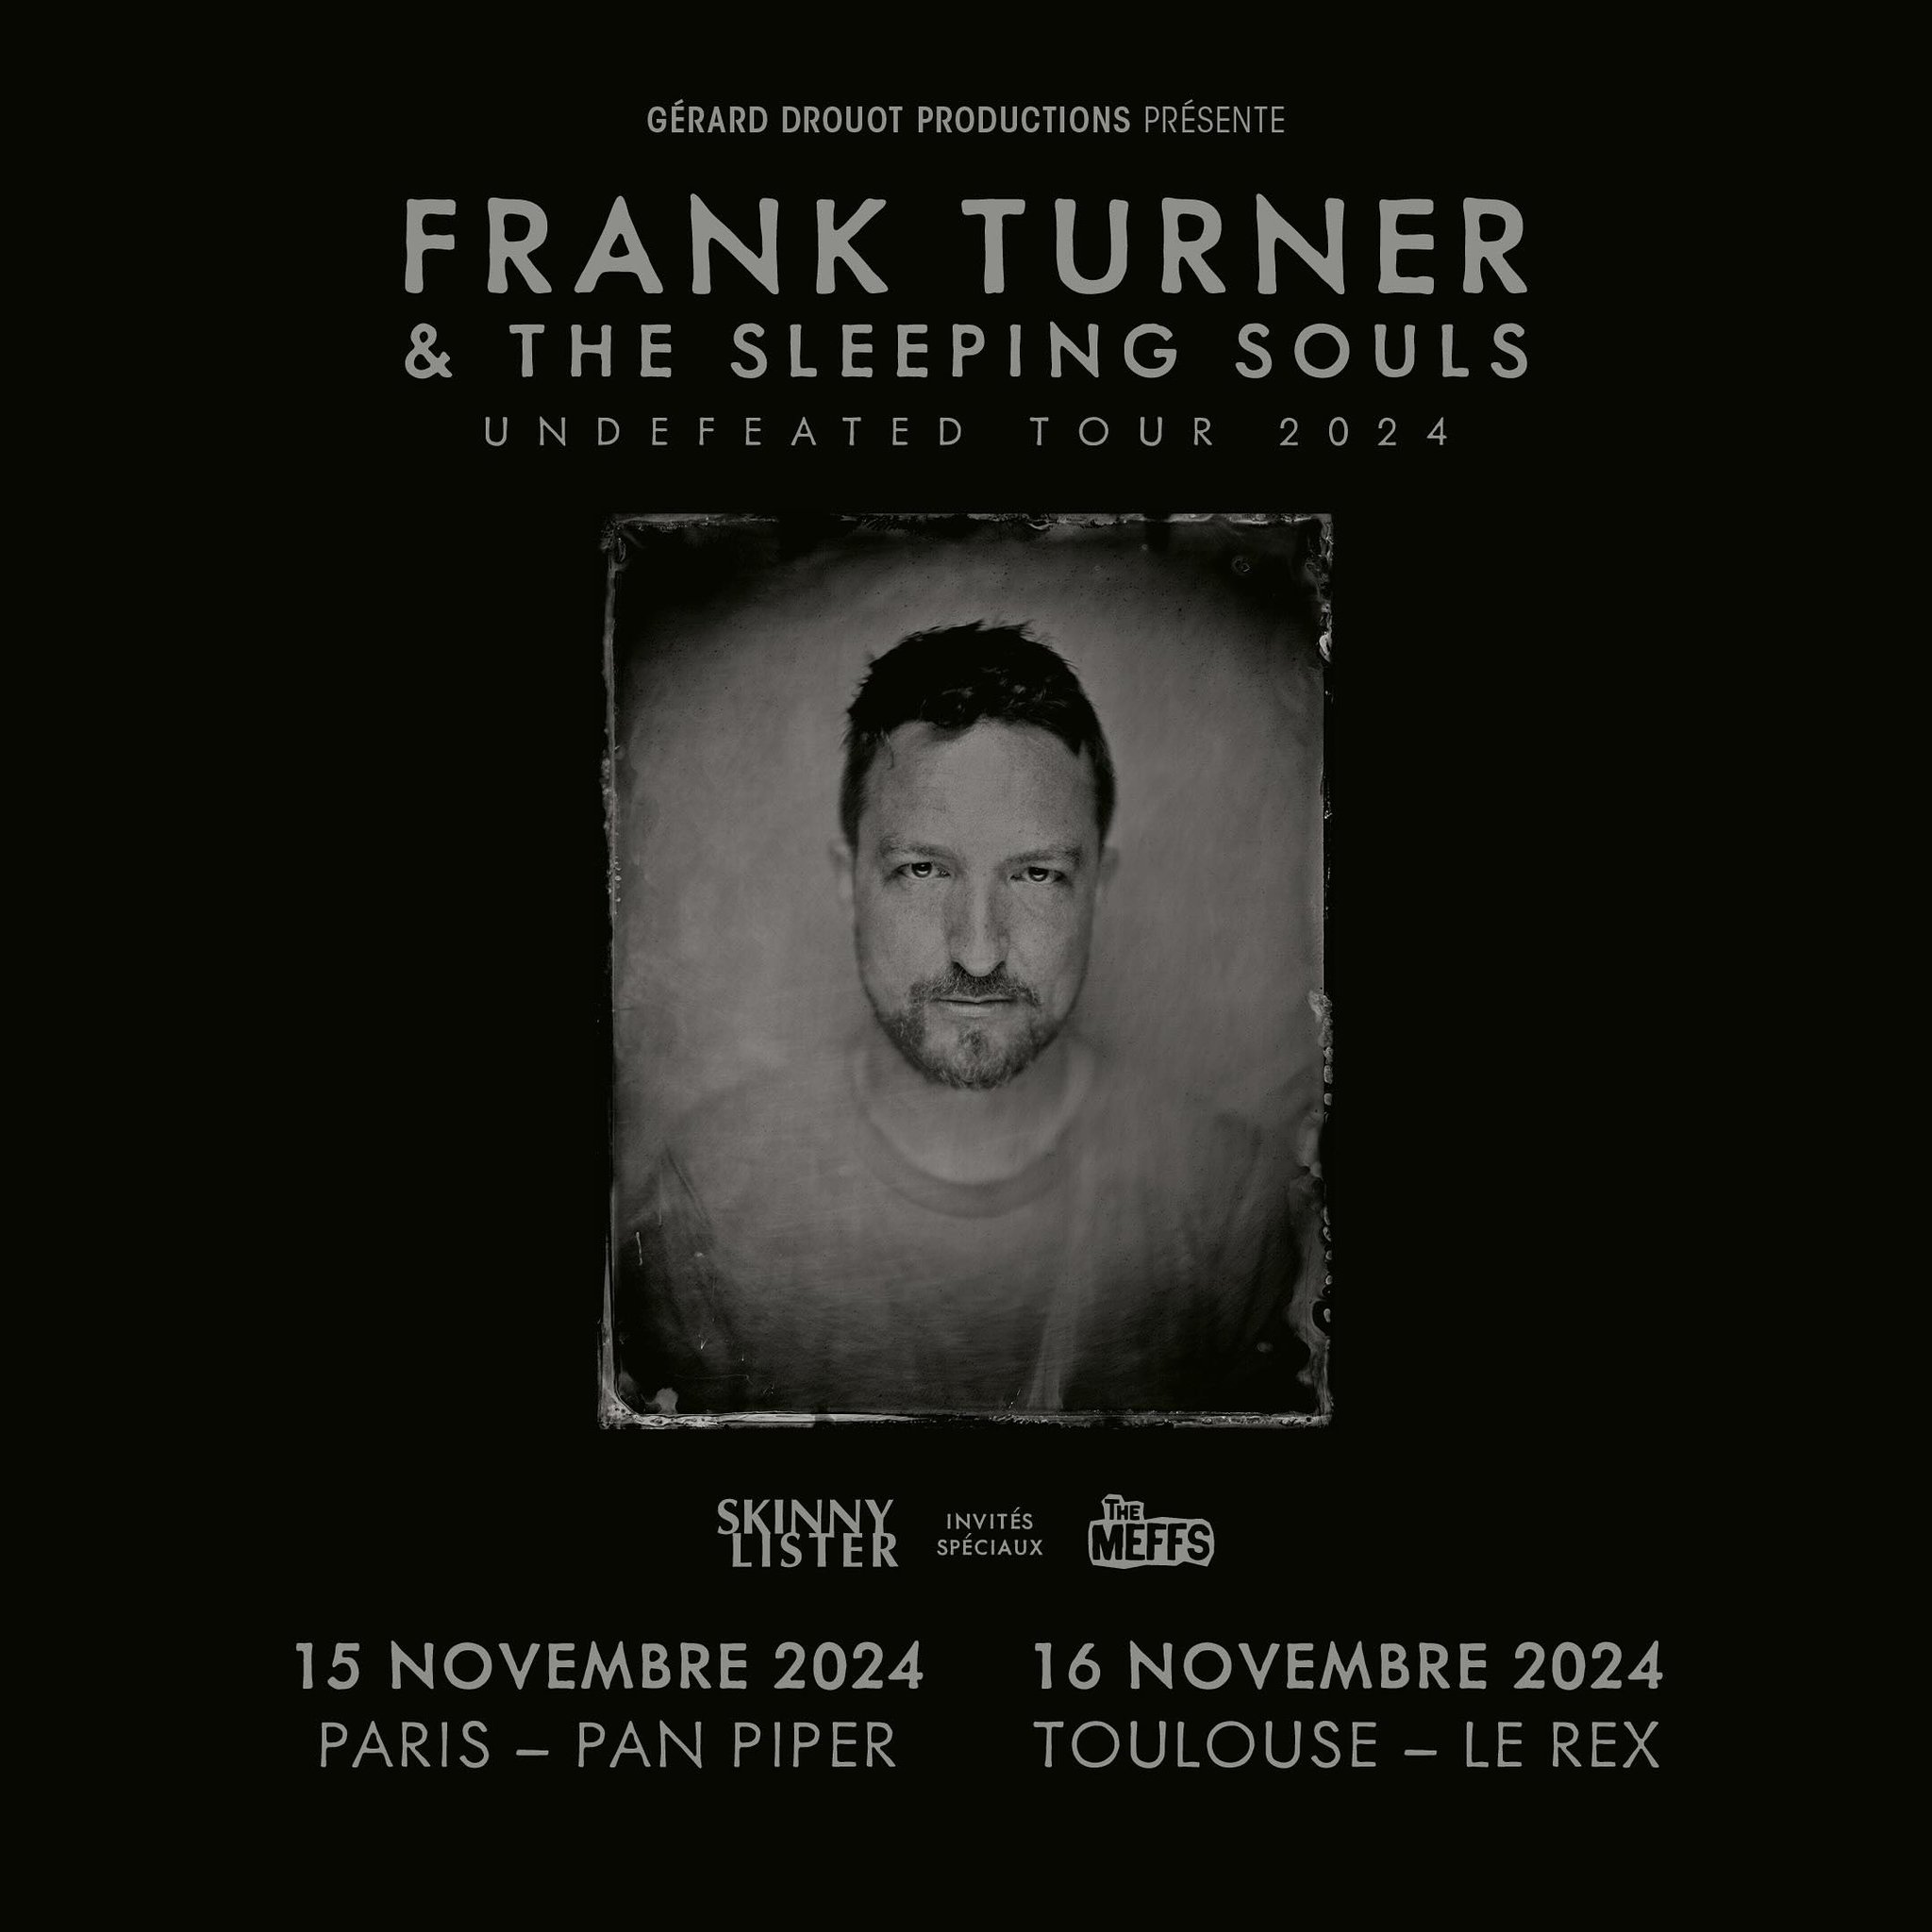 Billets Frank Turner and The Sleeping Souls (Pan Piper - Paris)